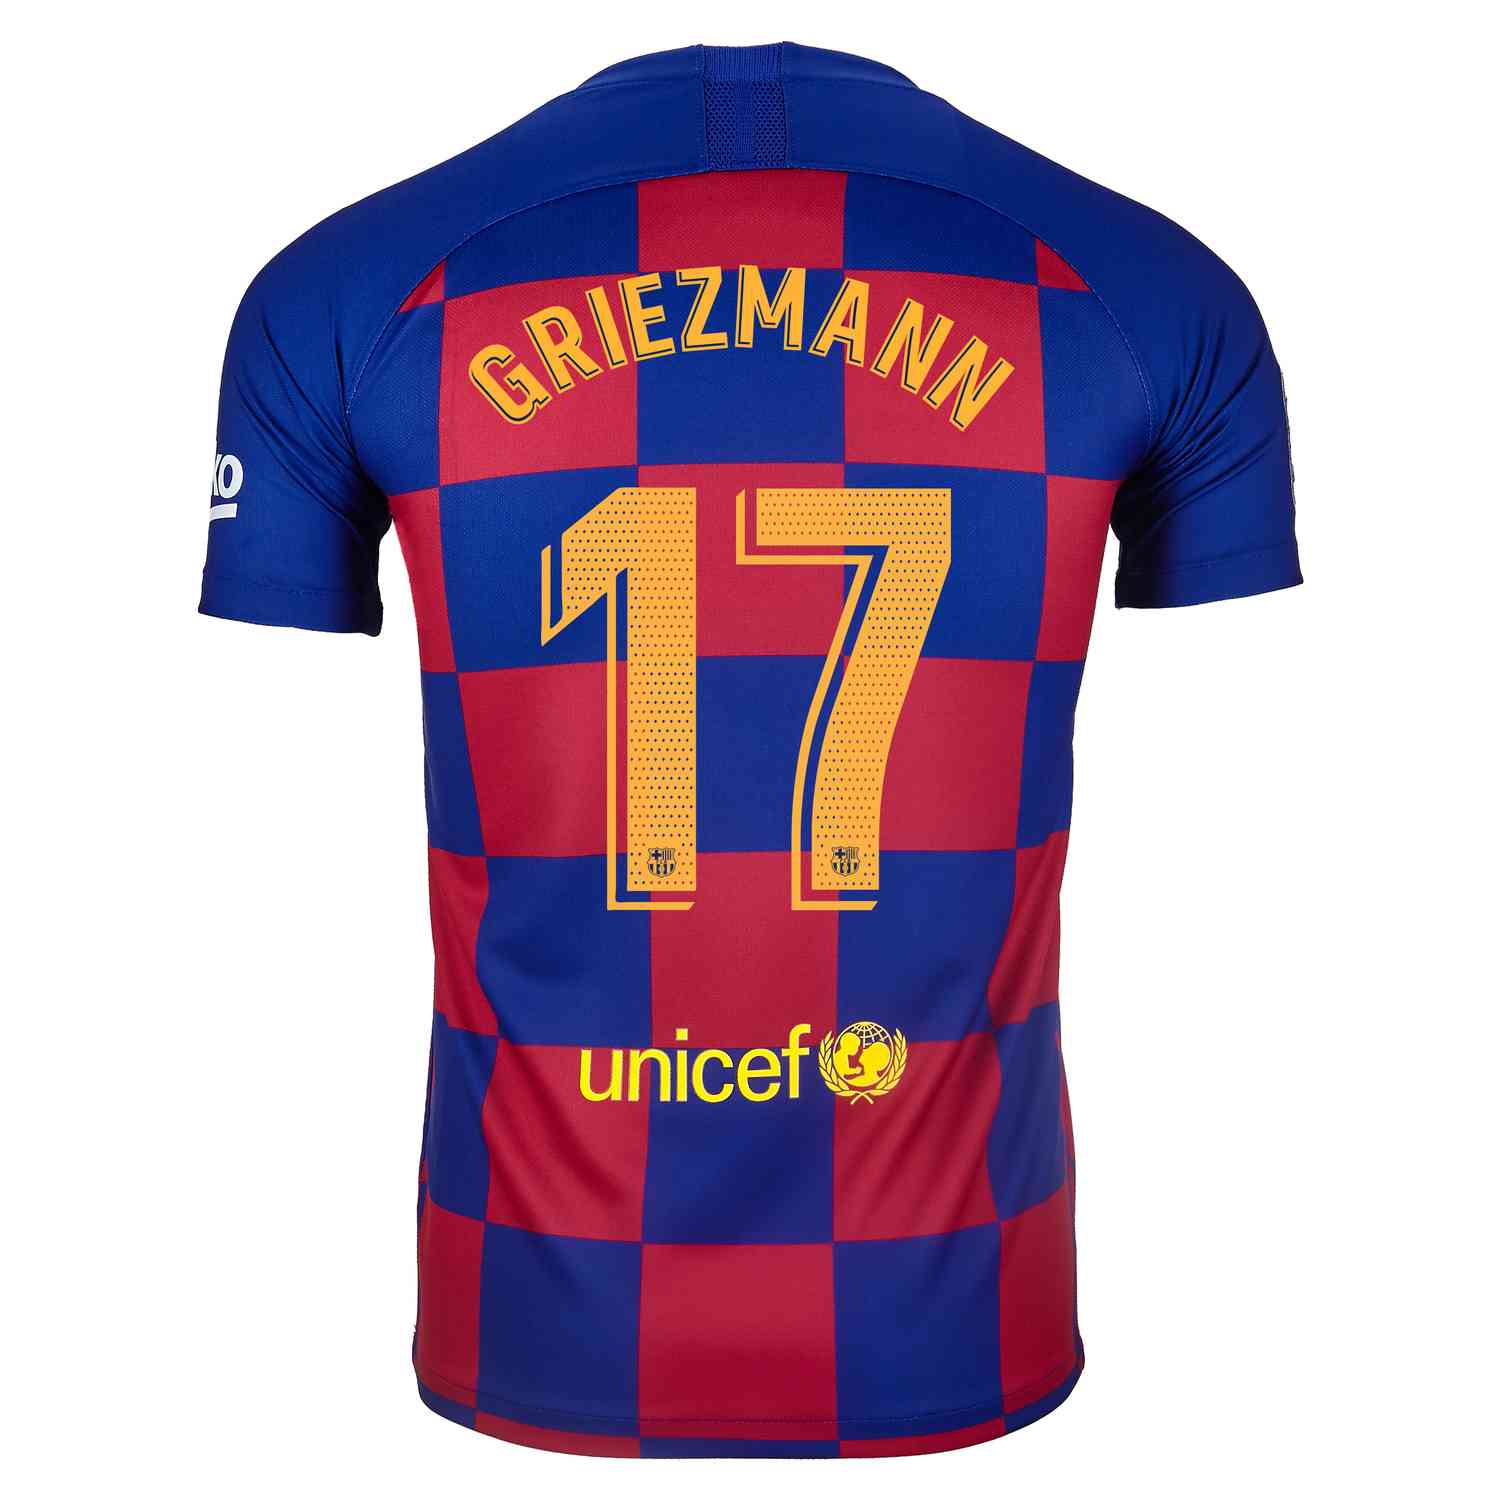 griezmann jersey number